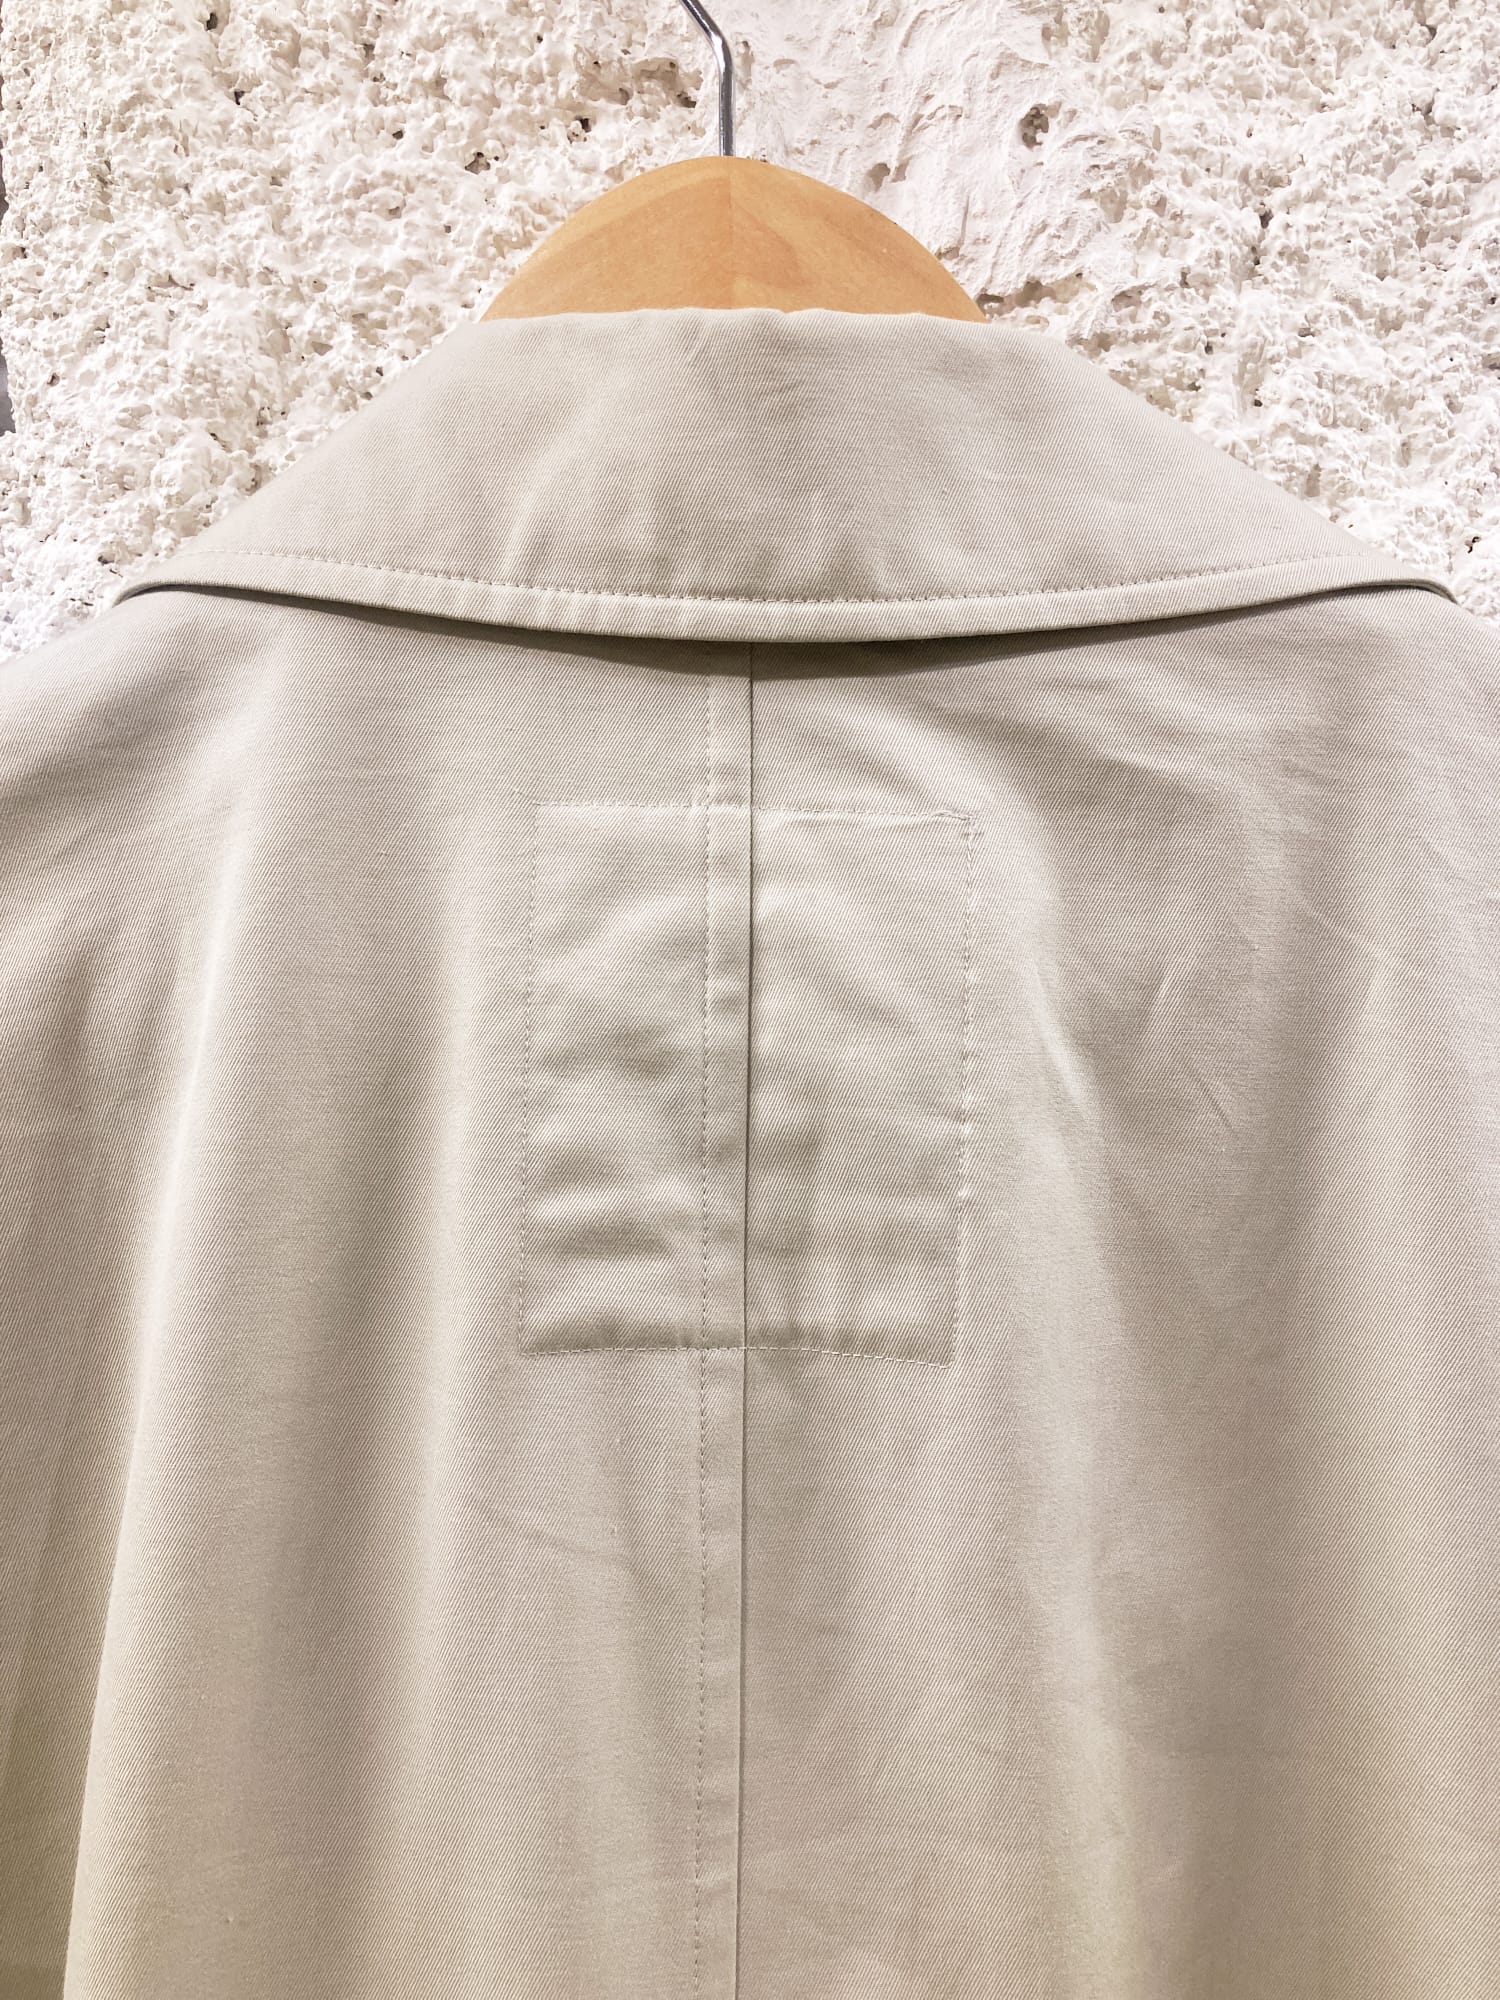 Yohji Yamamoto Impermeable Homme 1980s beige cotton raincoat with woolen liner